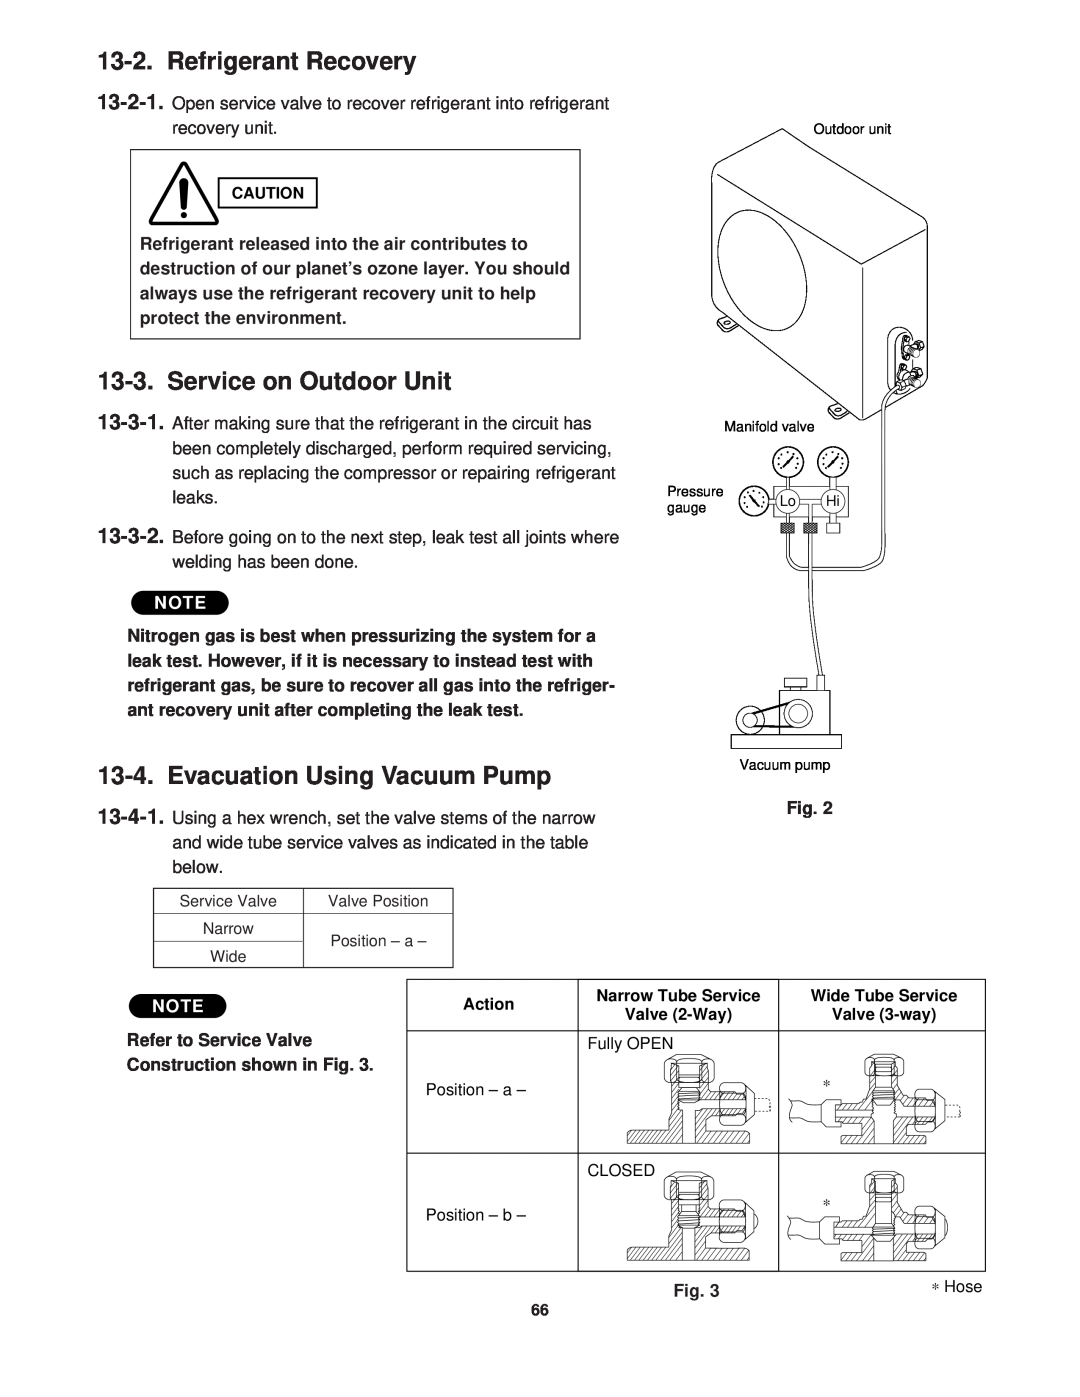 Sanyo CG1411, KGS1411 service manual Refrigerant Recovery, Service on Outdoor Unit, Evacuation Using Vacuum Pump 